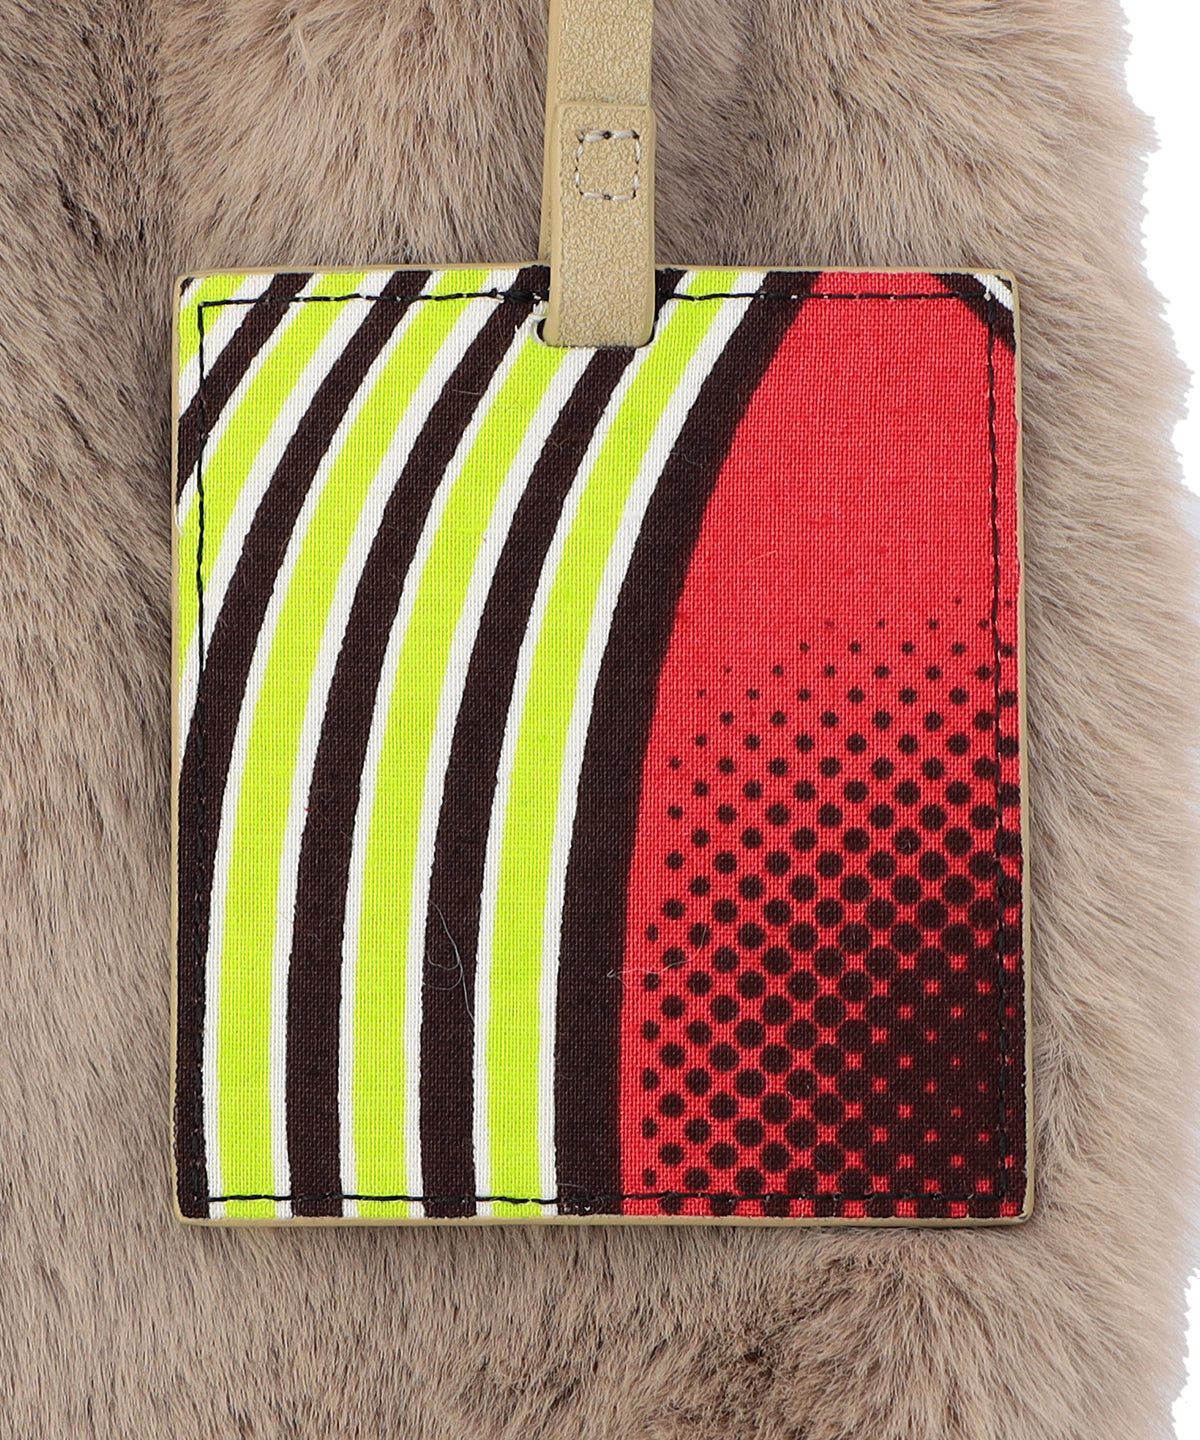 Eco Fur Convenience Bag(Medium) BEIGE